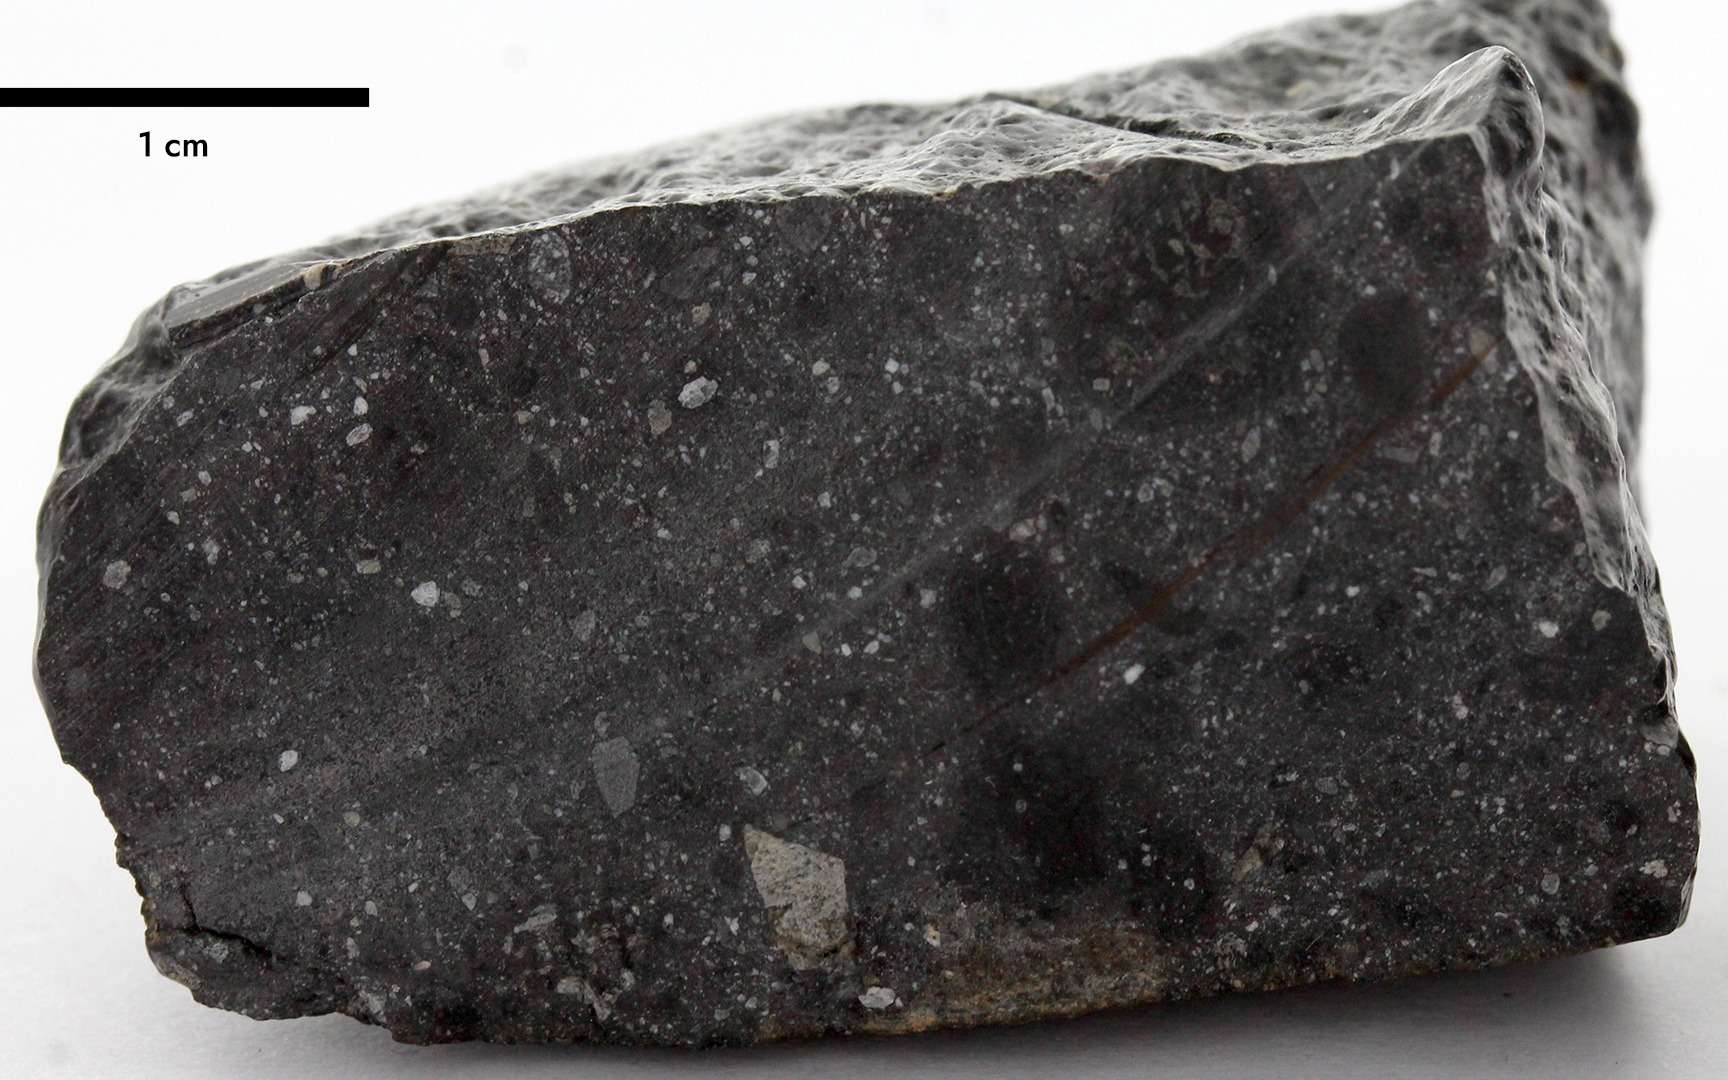 La météorite Black Beauty. © Nasa